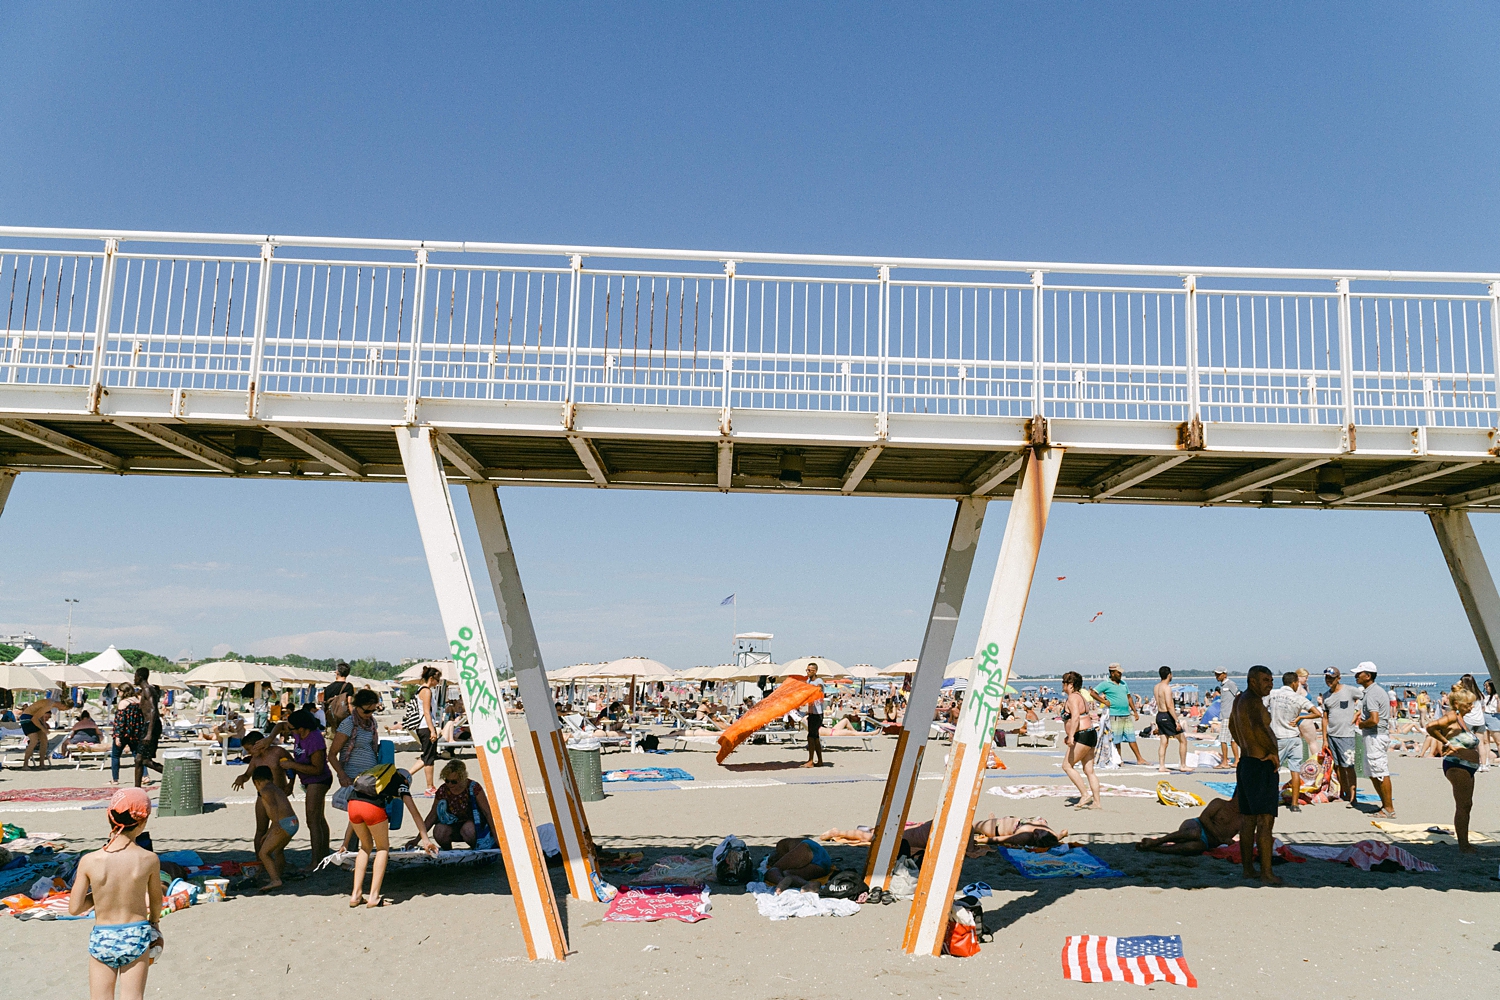 Lido Beach walkway with sunbathers in Italy